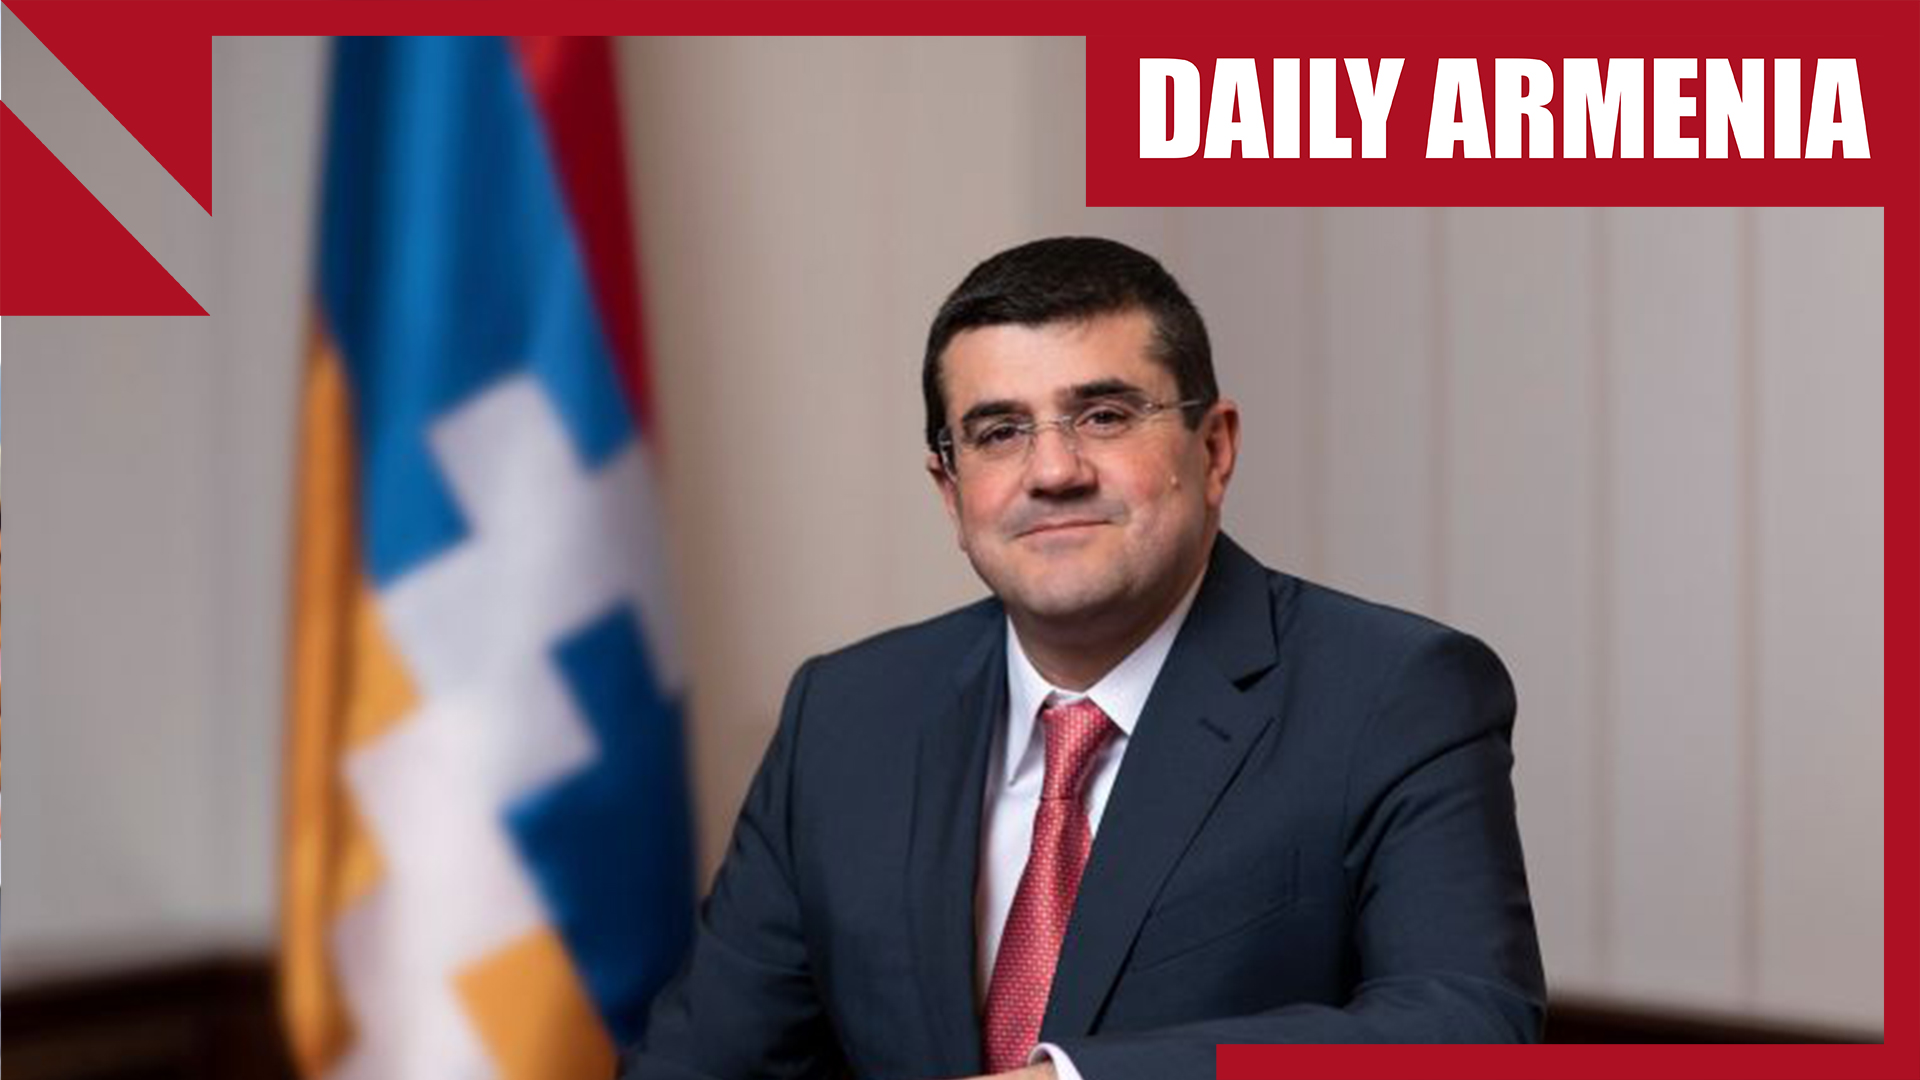 Facebook briefly suspends Karabakh president’s account